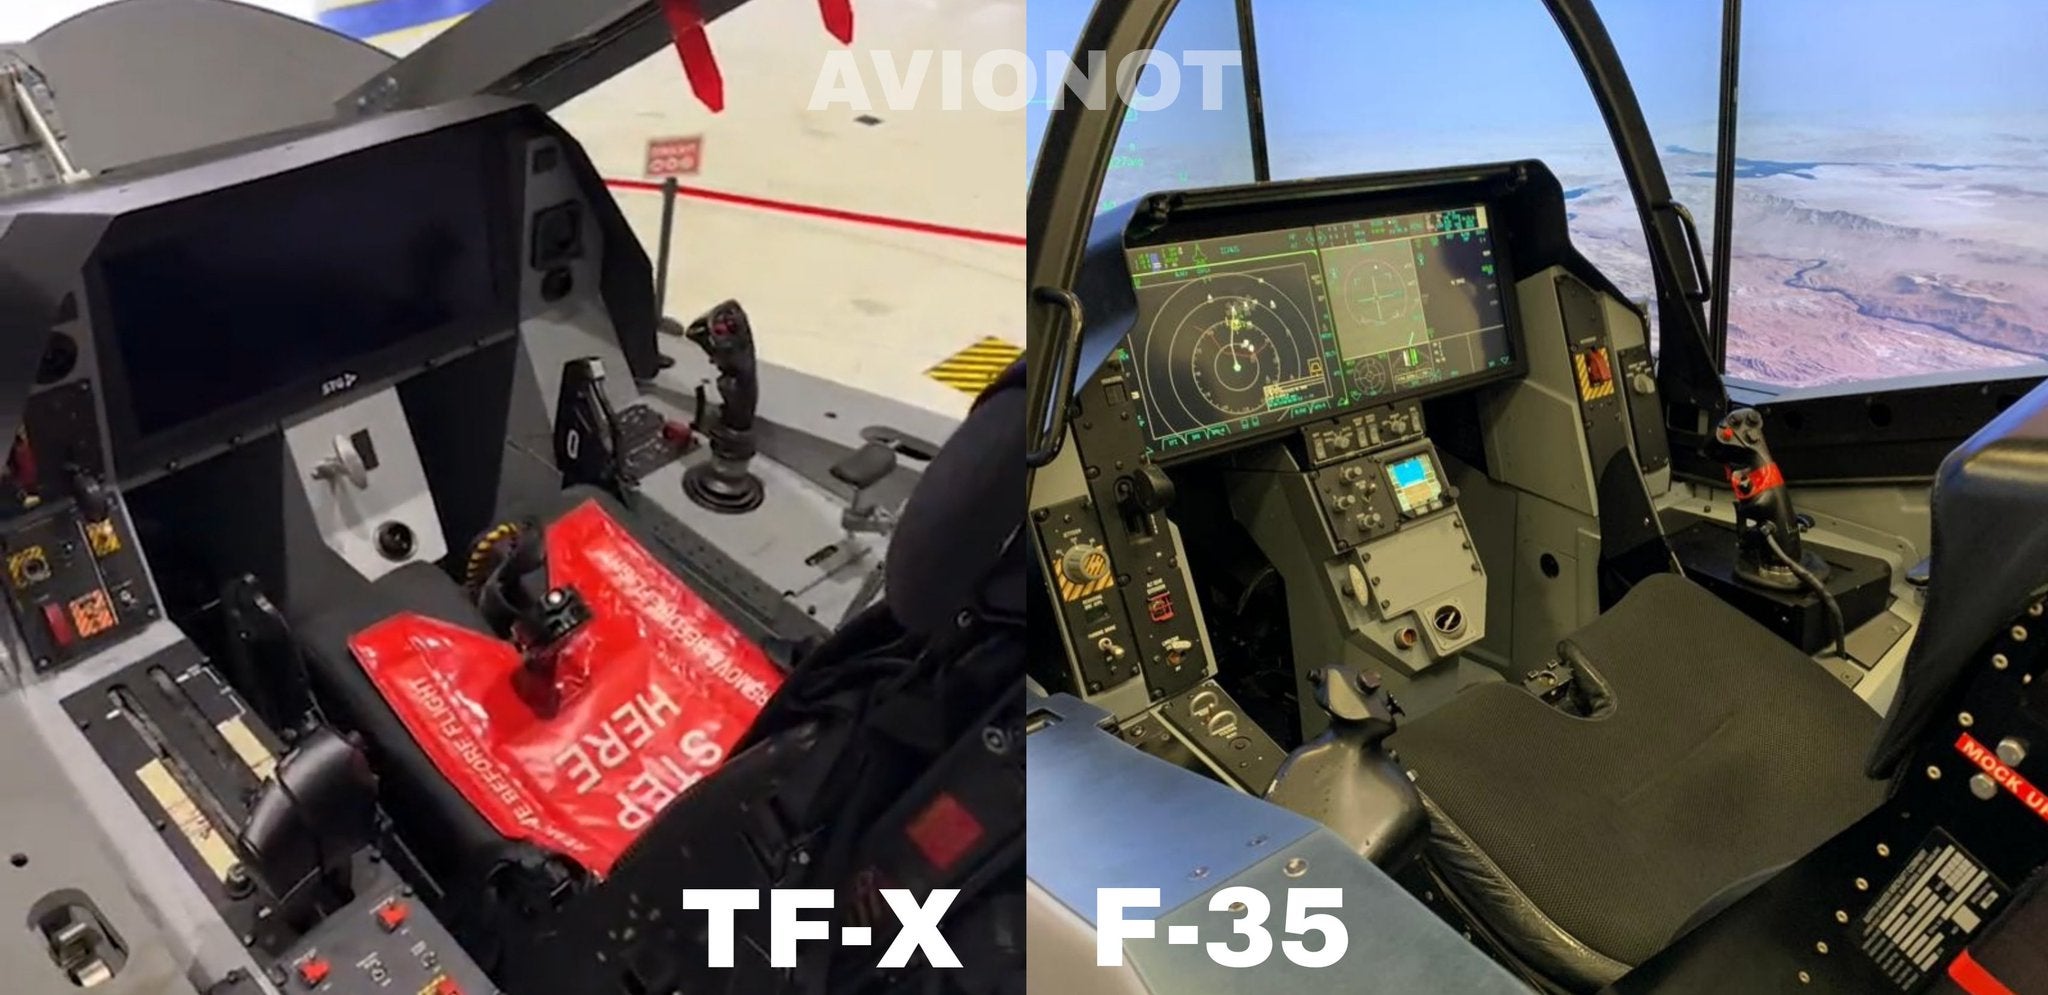 f-35-lightning-ii-and-tai-tf-x-cockpit-comprasion-2048x995-v0-6th3iftoxwra1.jpg